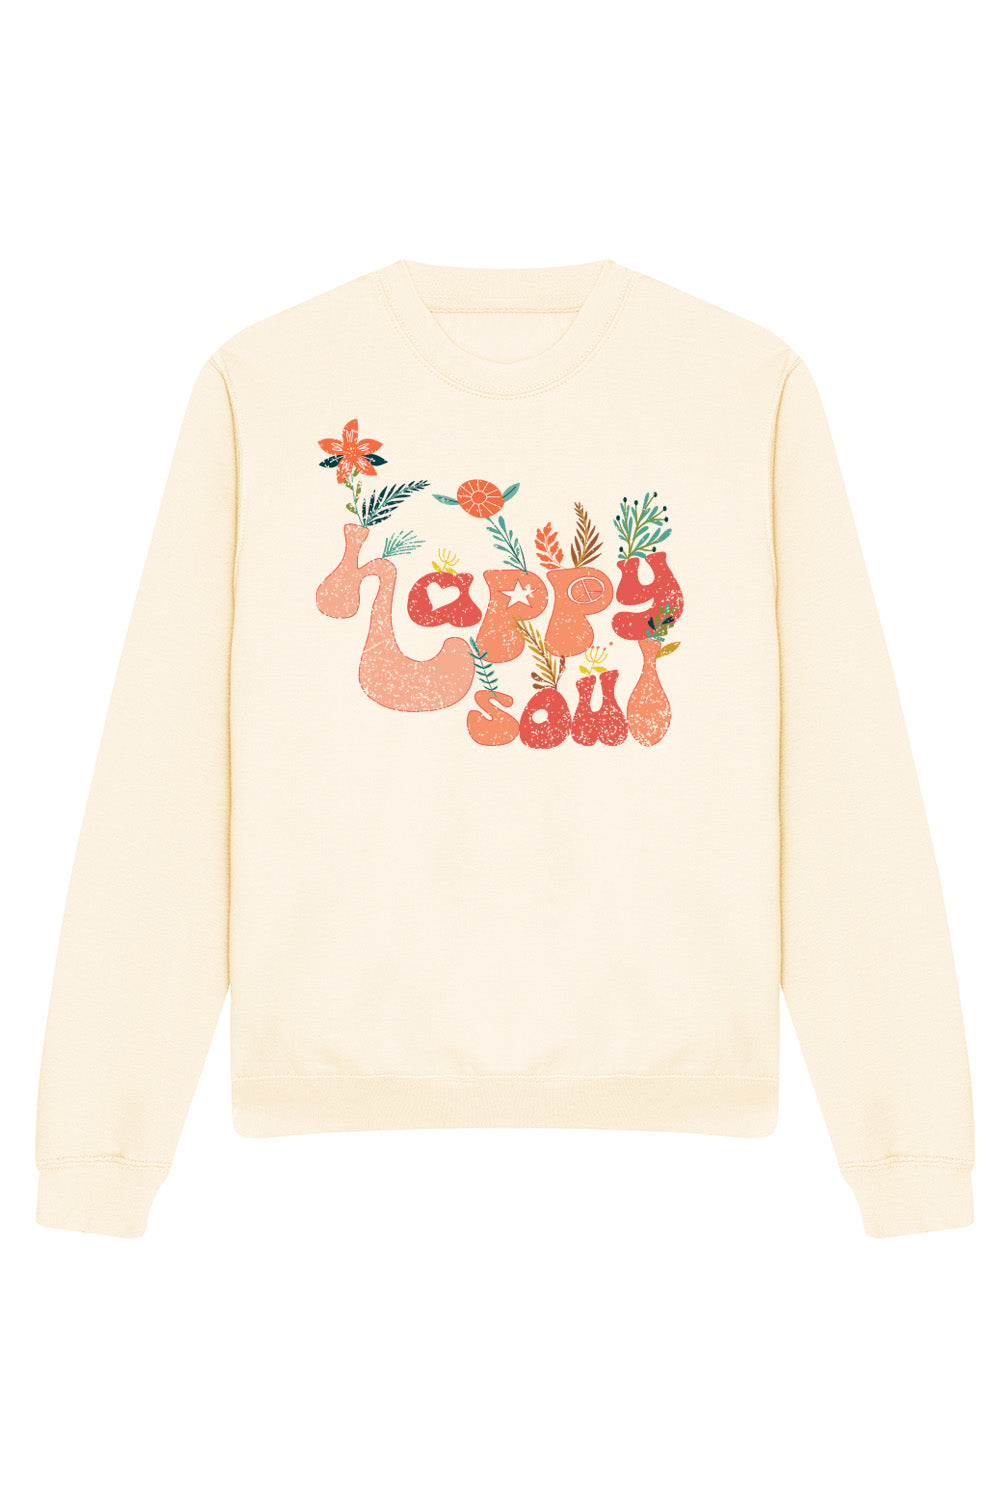 Happy Soul Sweatshirt In Vanilla (Custom Pack)